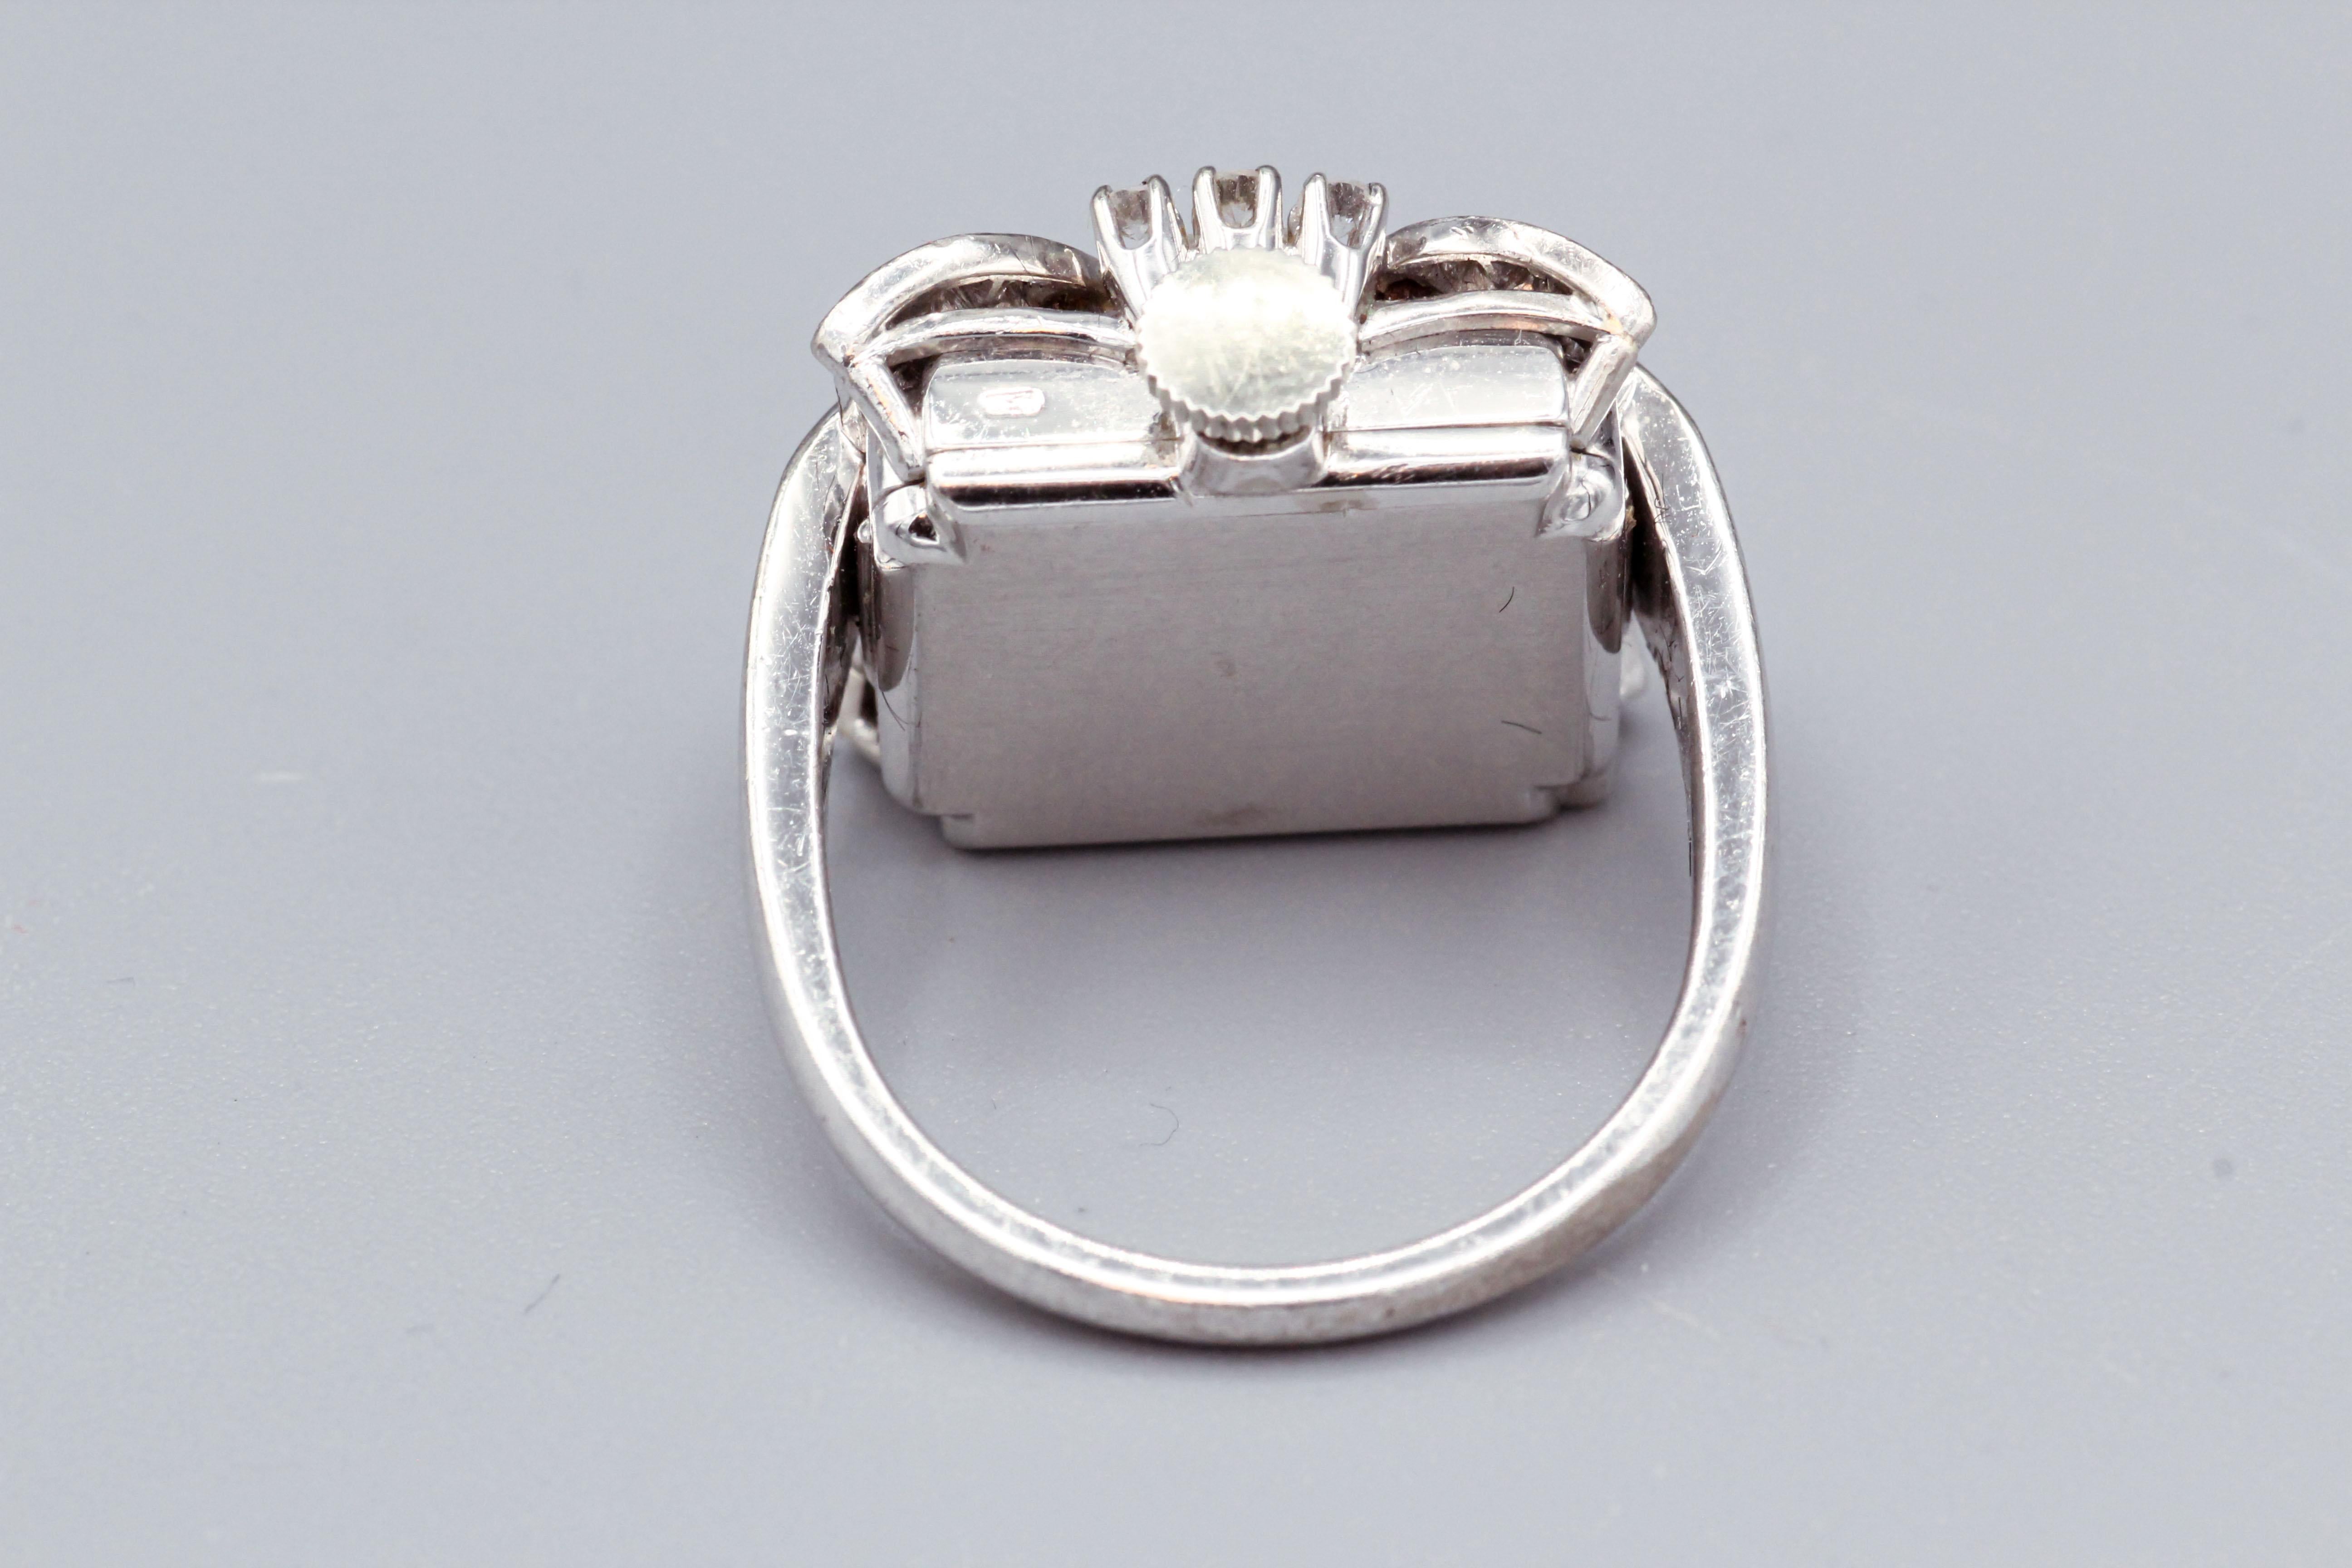 Brilliant Cut Rolex Diamond 18k White Gold Watch Ring